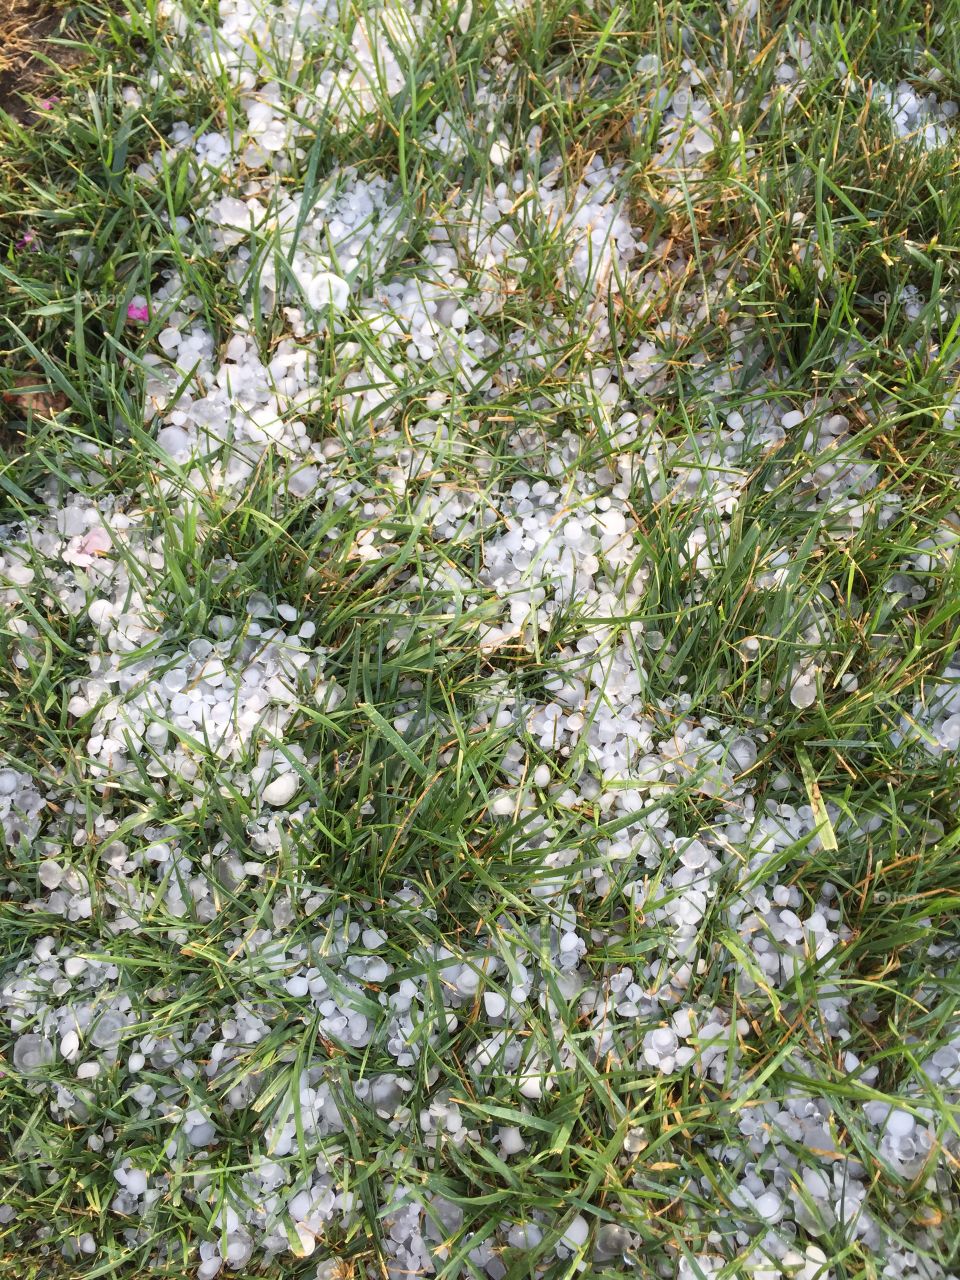 Grass and hail